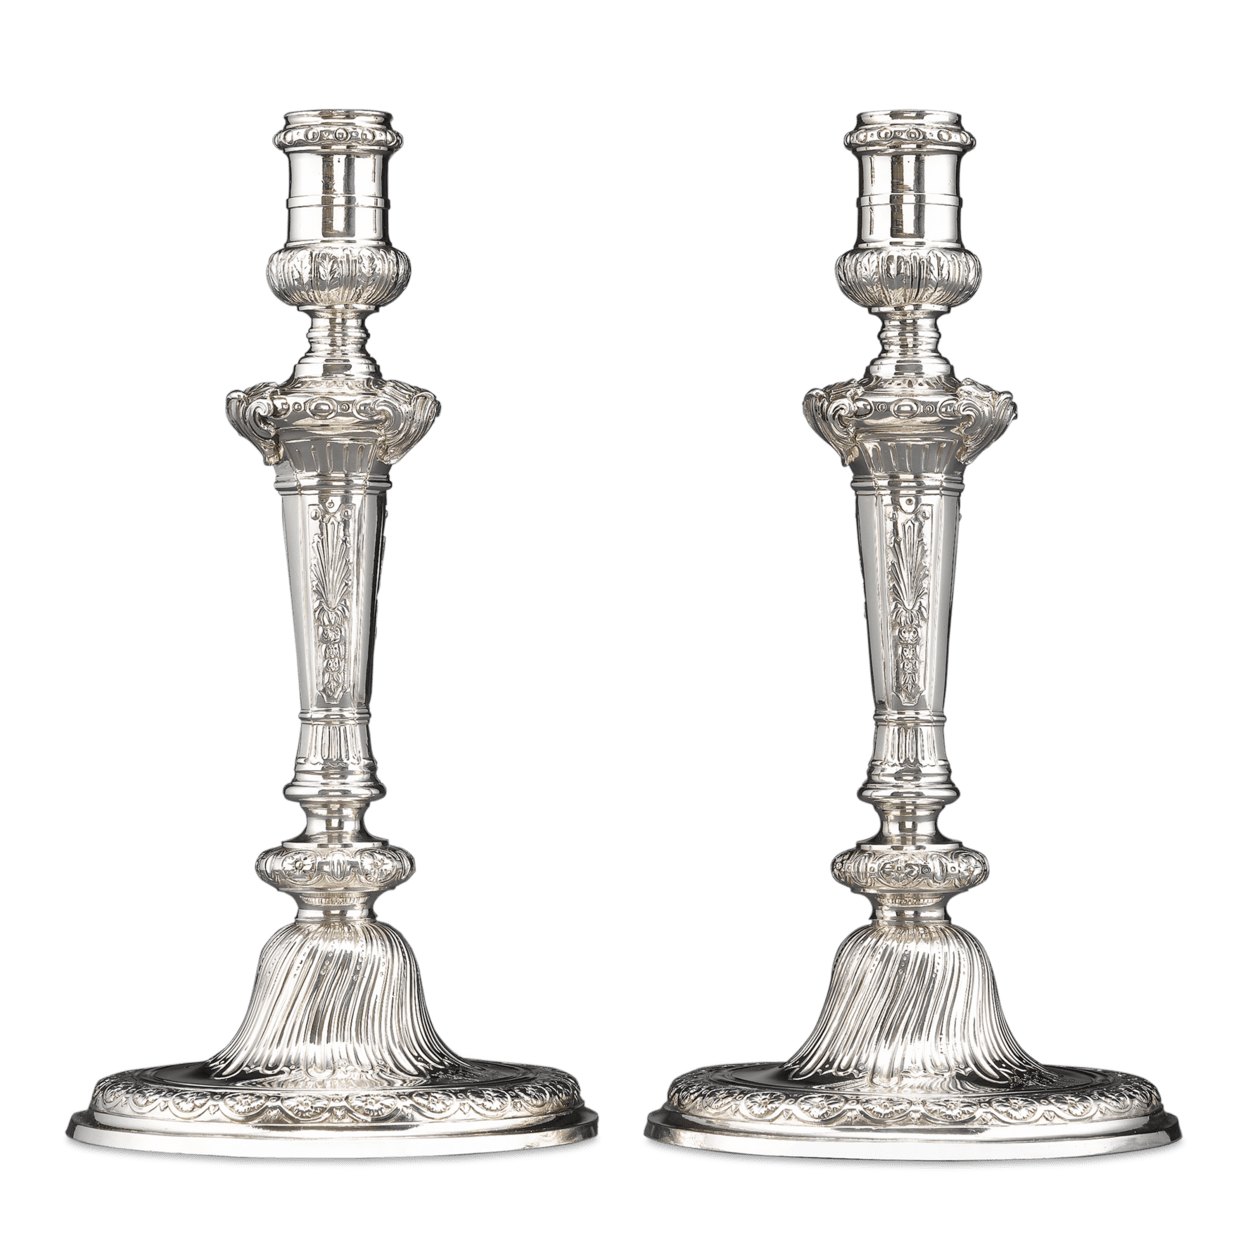 Stunning Rococo design distinguishes this pair of Georgian candlesticks